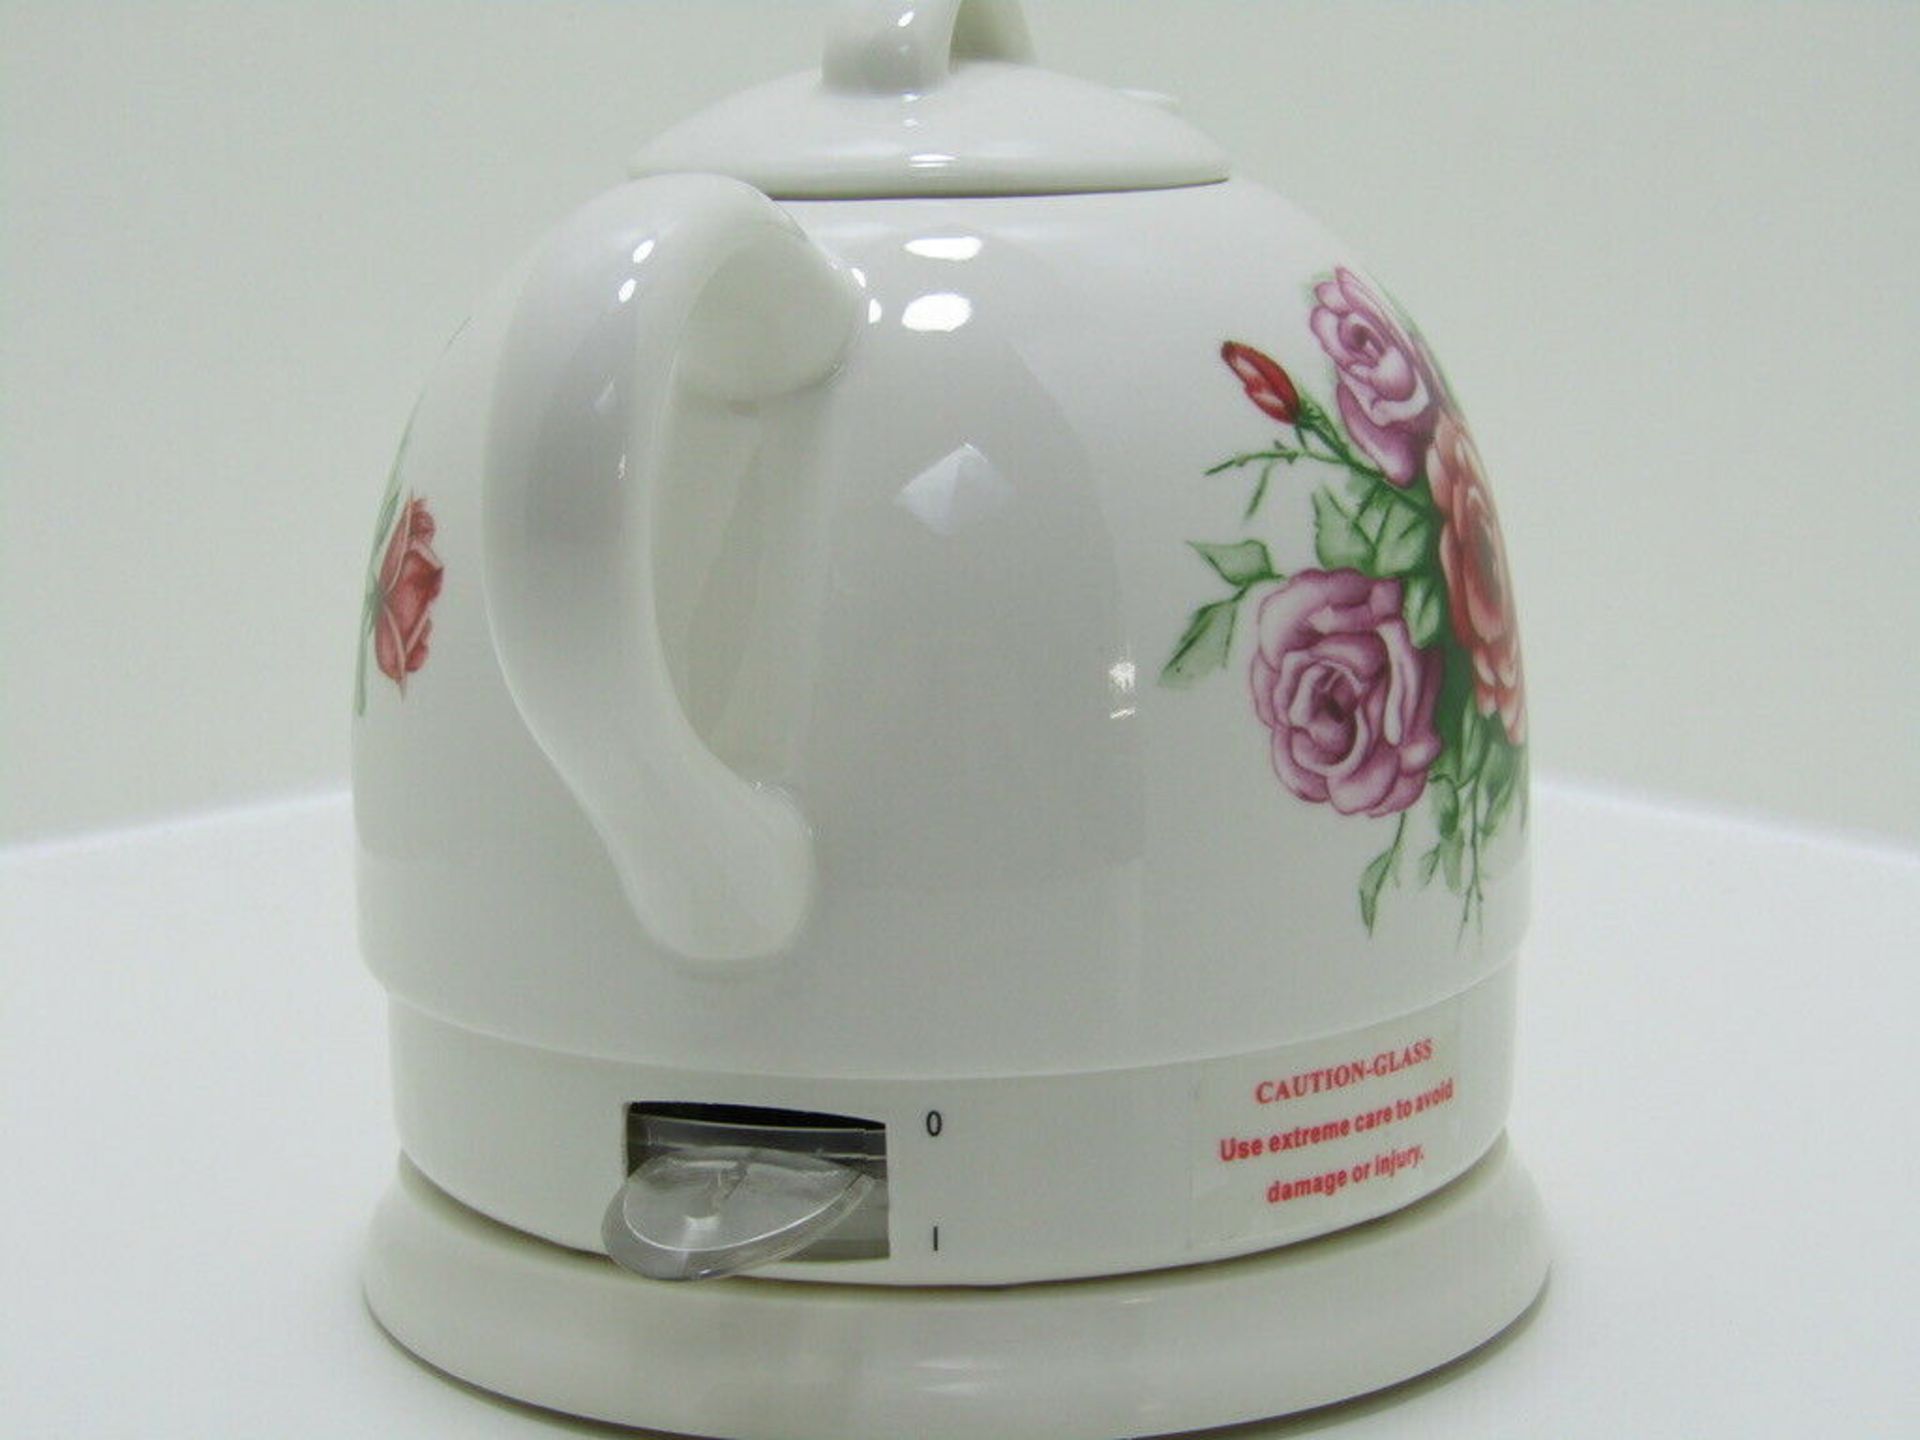 Country Rose Ceramic Kettle. White. Cordless. Tea Pot design. VJ905 - Image 7 of 8